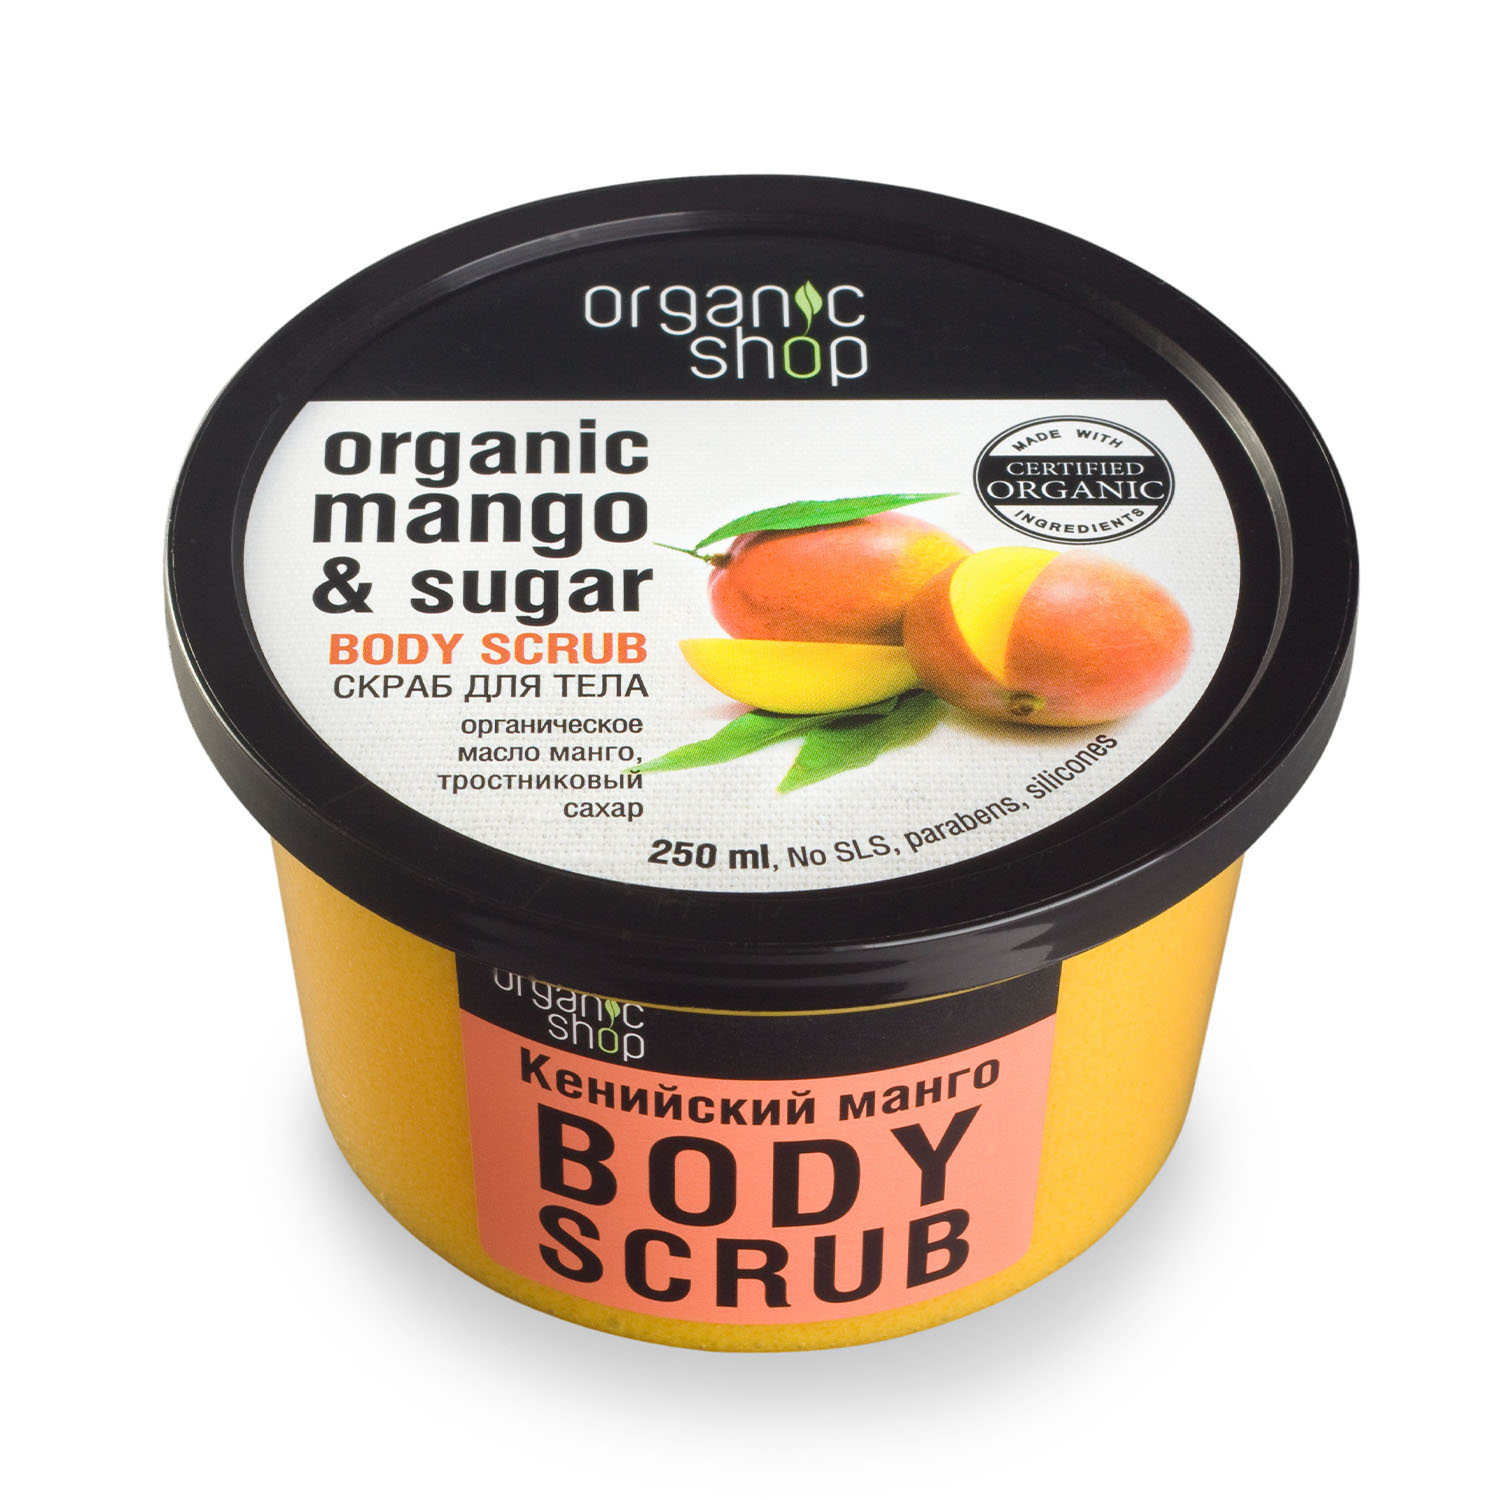 Organic Shop Скраб для тела Кенийский манго, 250 мл (Organic Shop, Классика) organic shop скраб для тела кенийский манго 250мл 3 шт